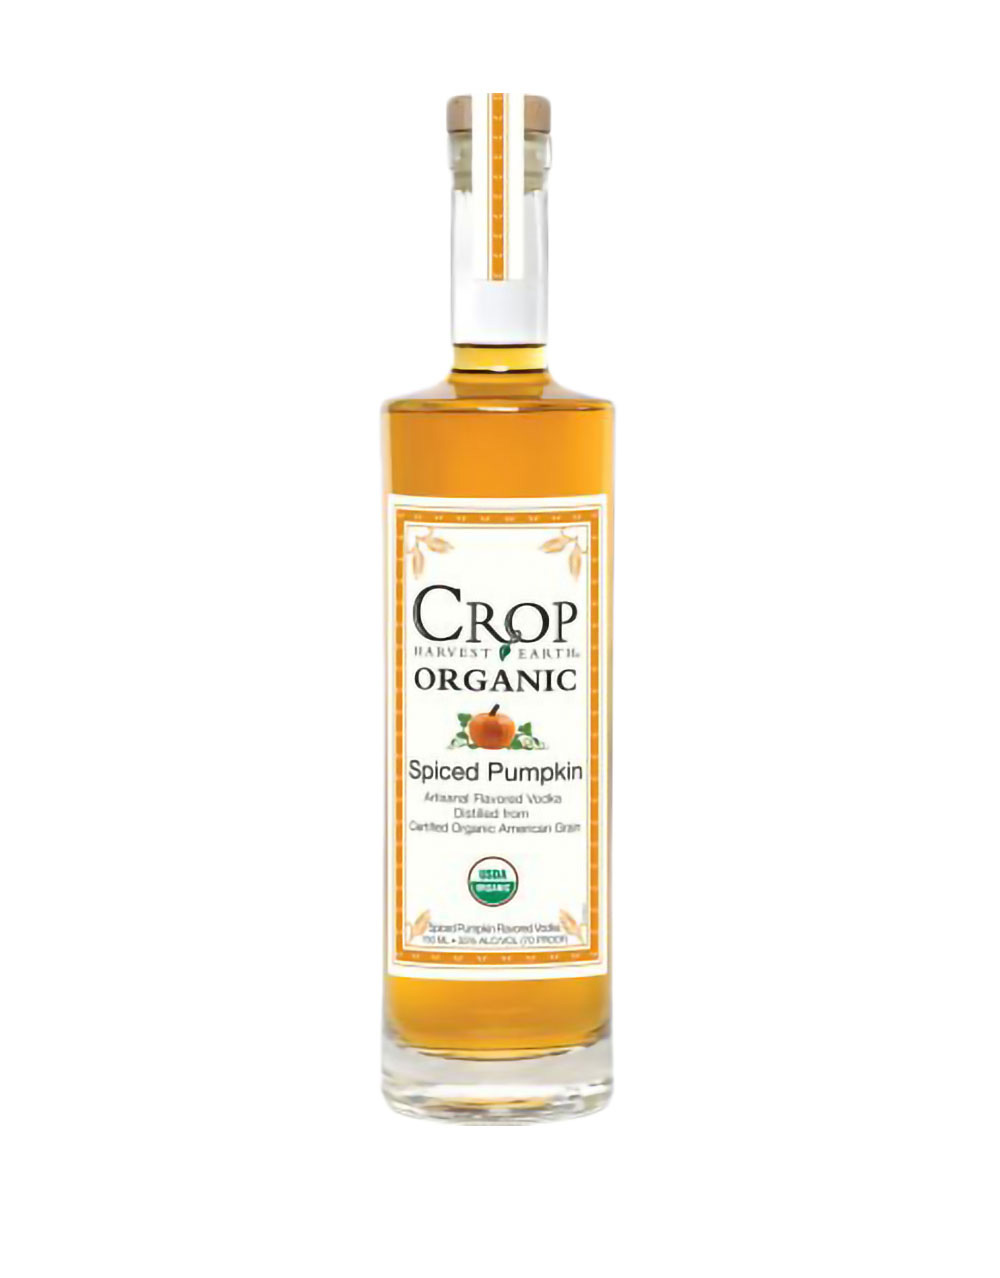 Crop Organic Spiced Pumpkin Vodka